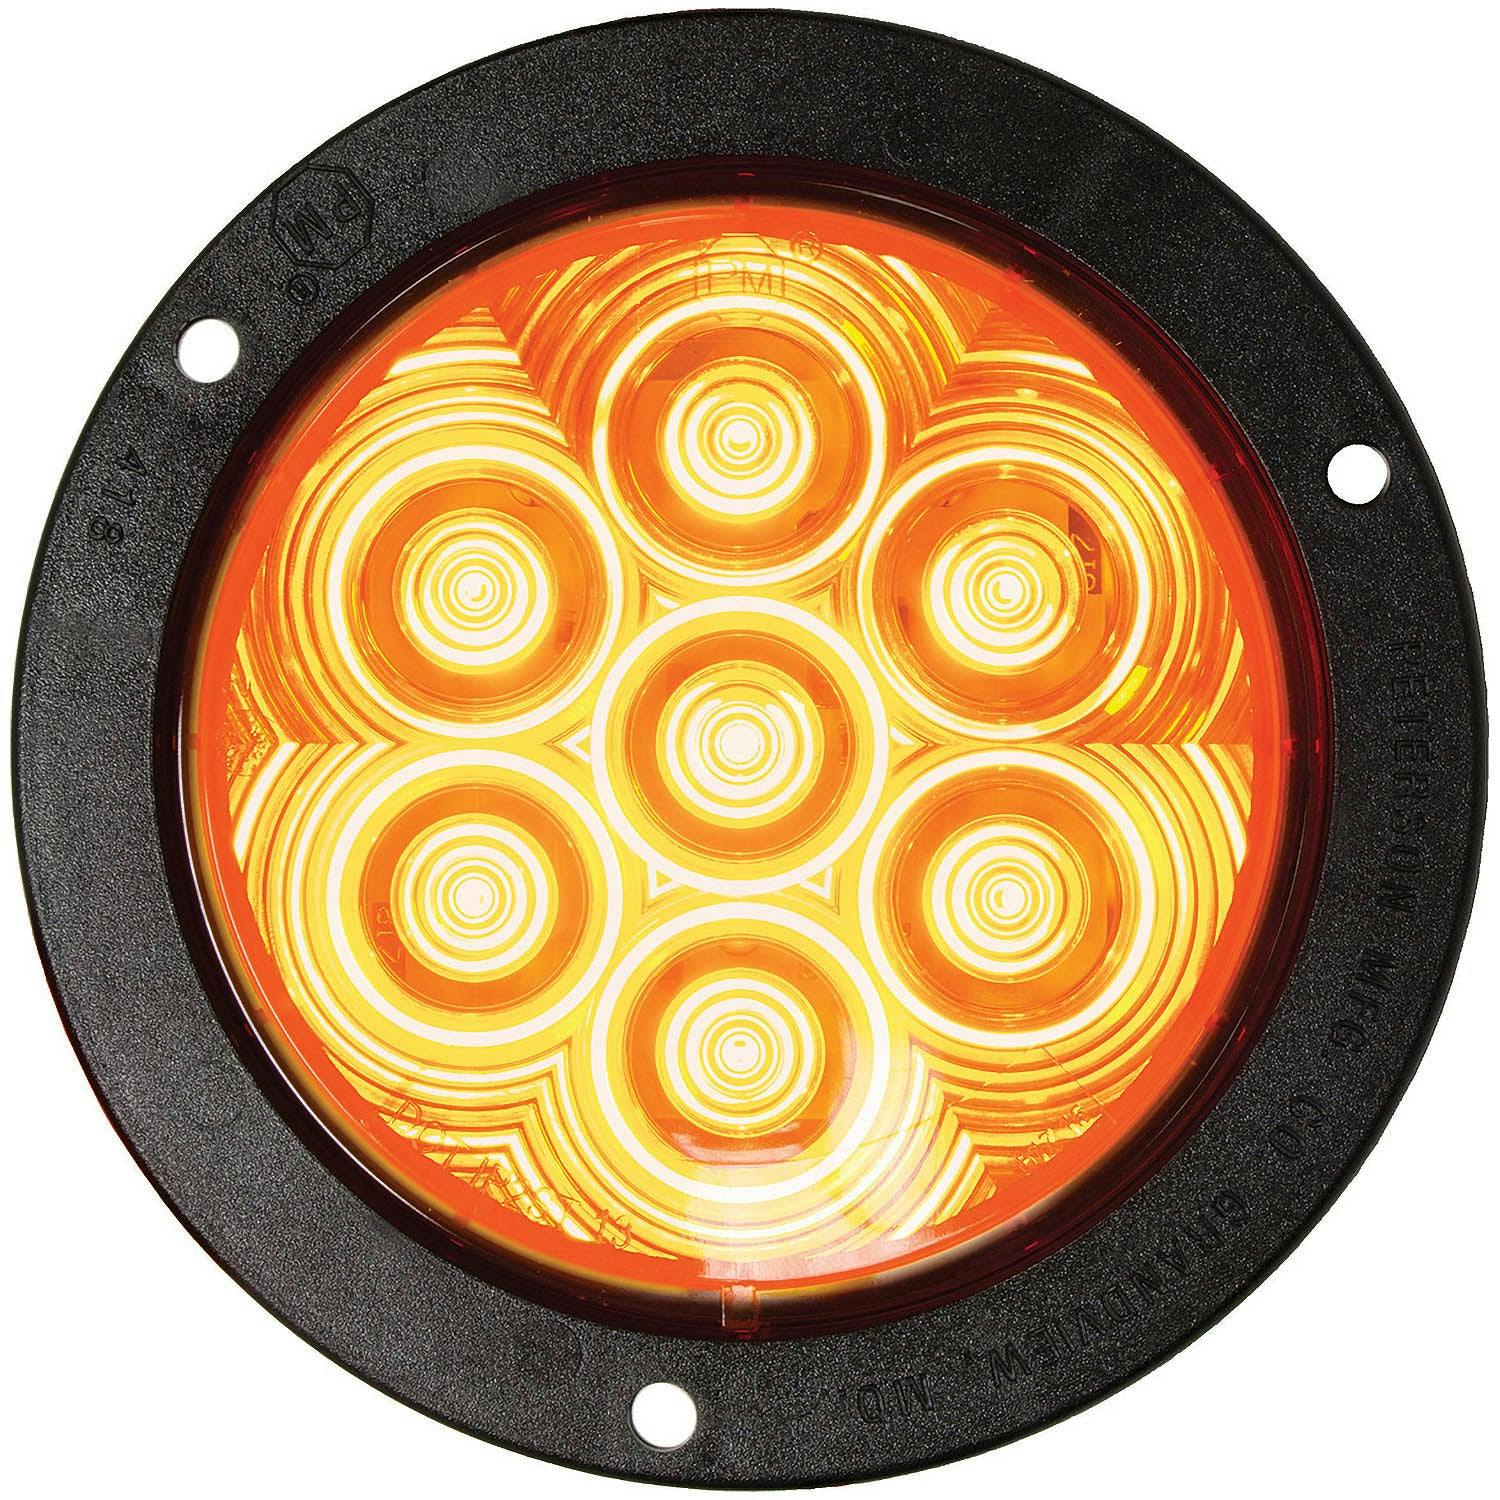 LED Turn Signal, Front & Rear, Round, AMP, Flange-Mount 4", amber, bulk pack (Pack of 50)